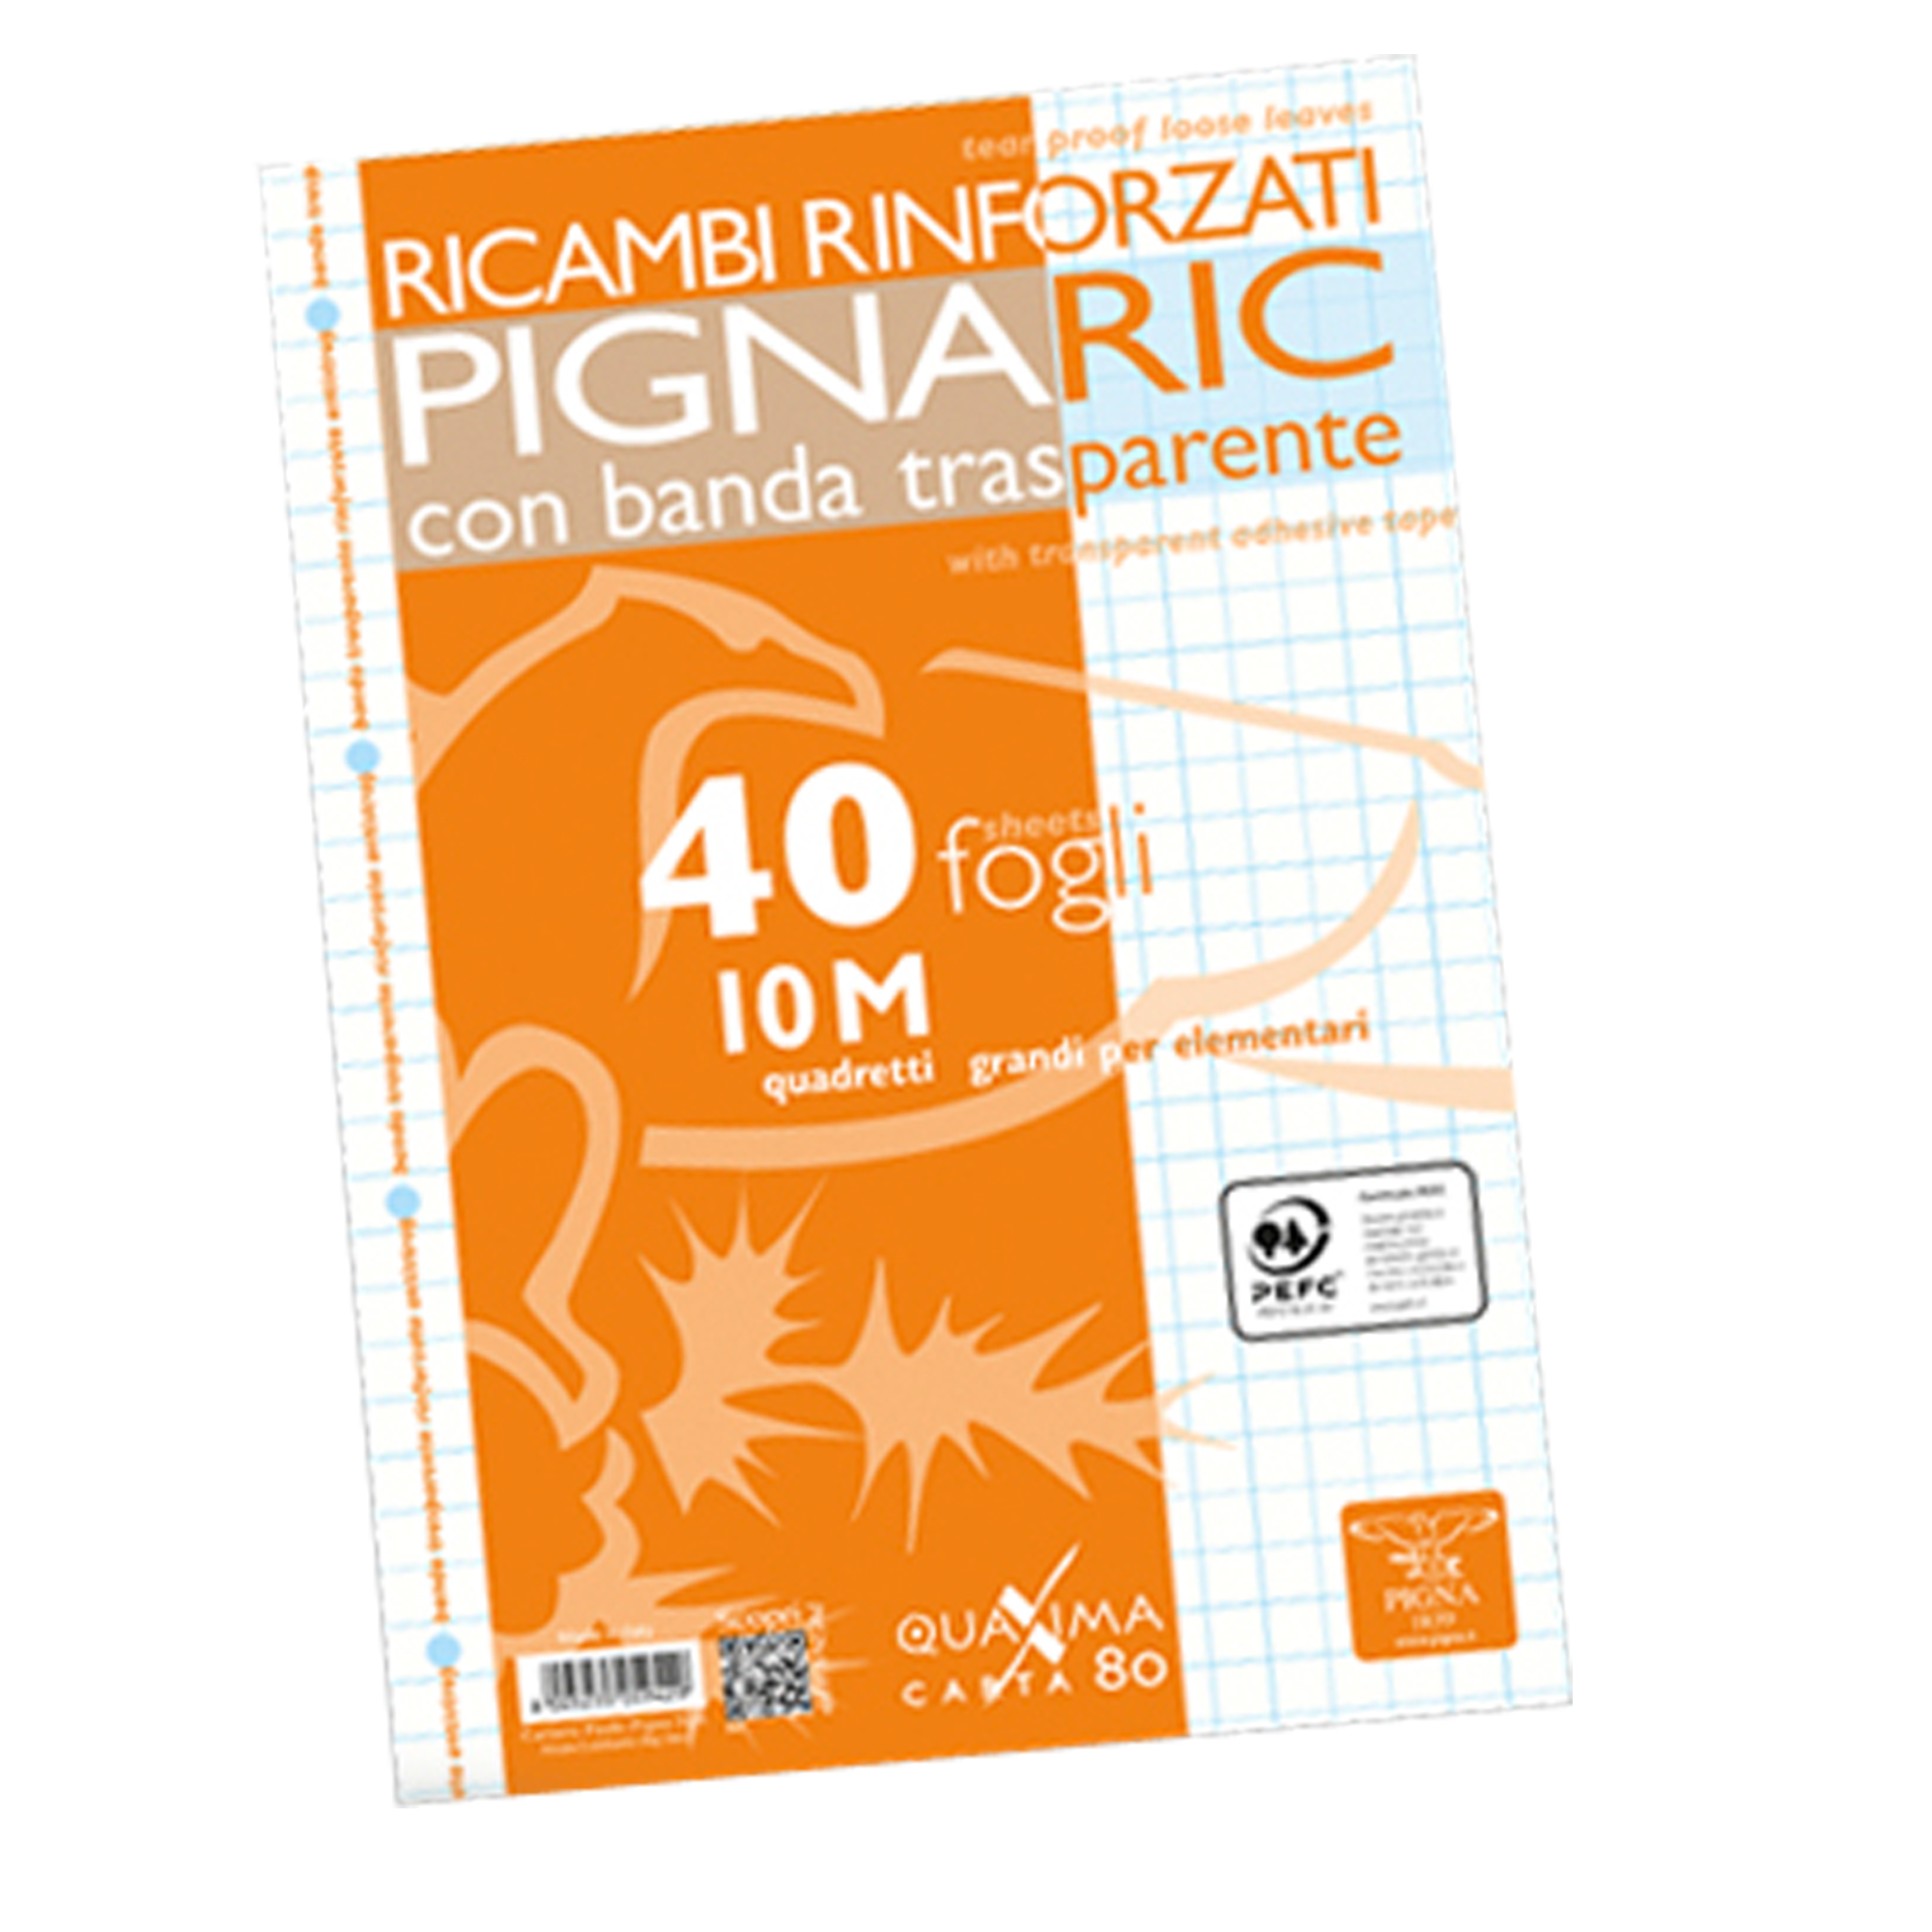 Ricambi forati rinforzati Pignaric - A4 - quadretto 10mm - 40 fogli - 80gr - Pigna